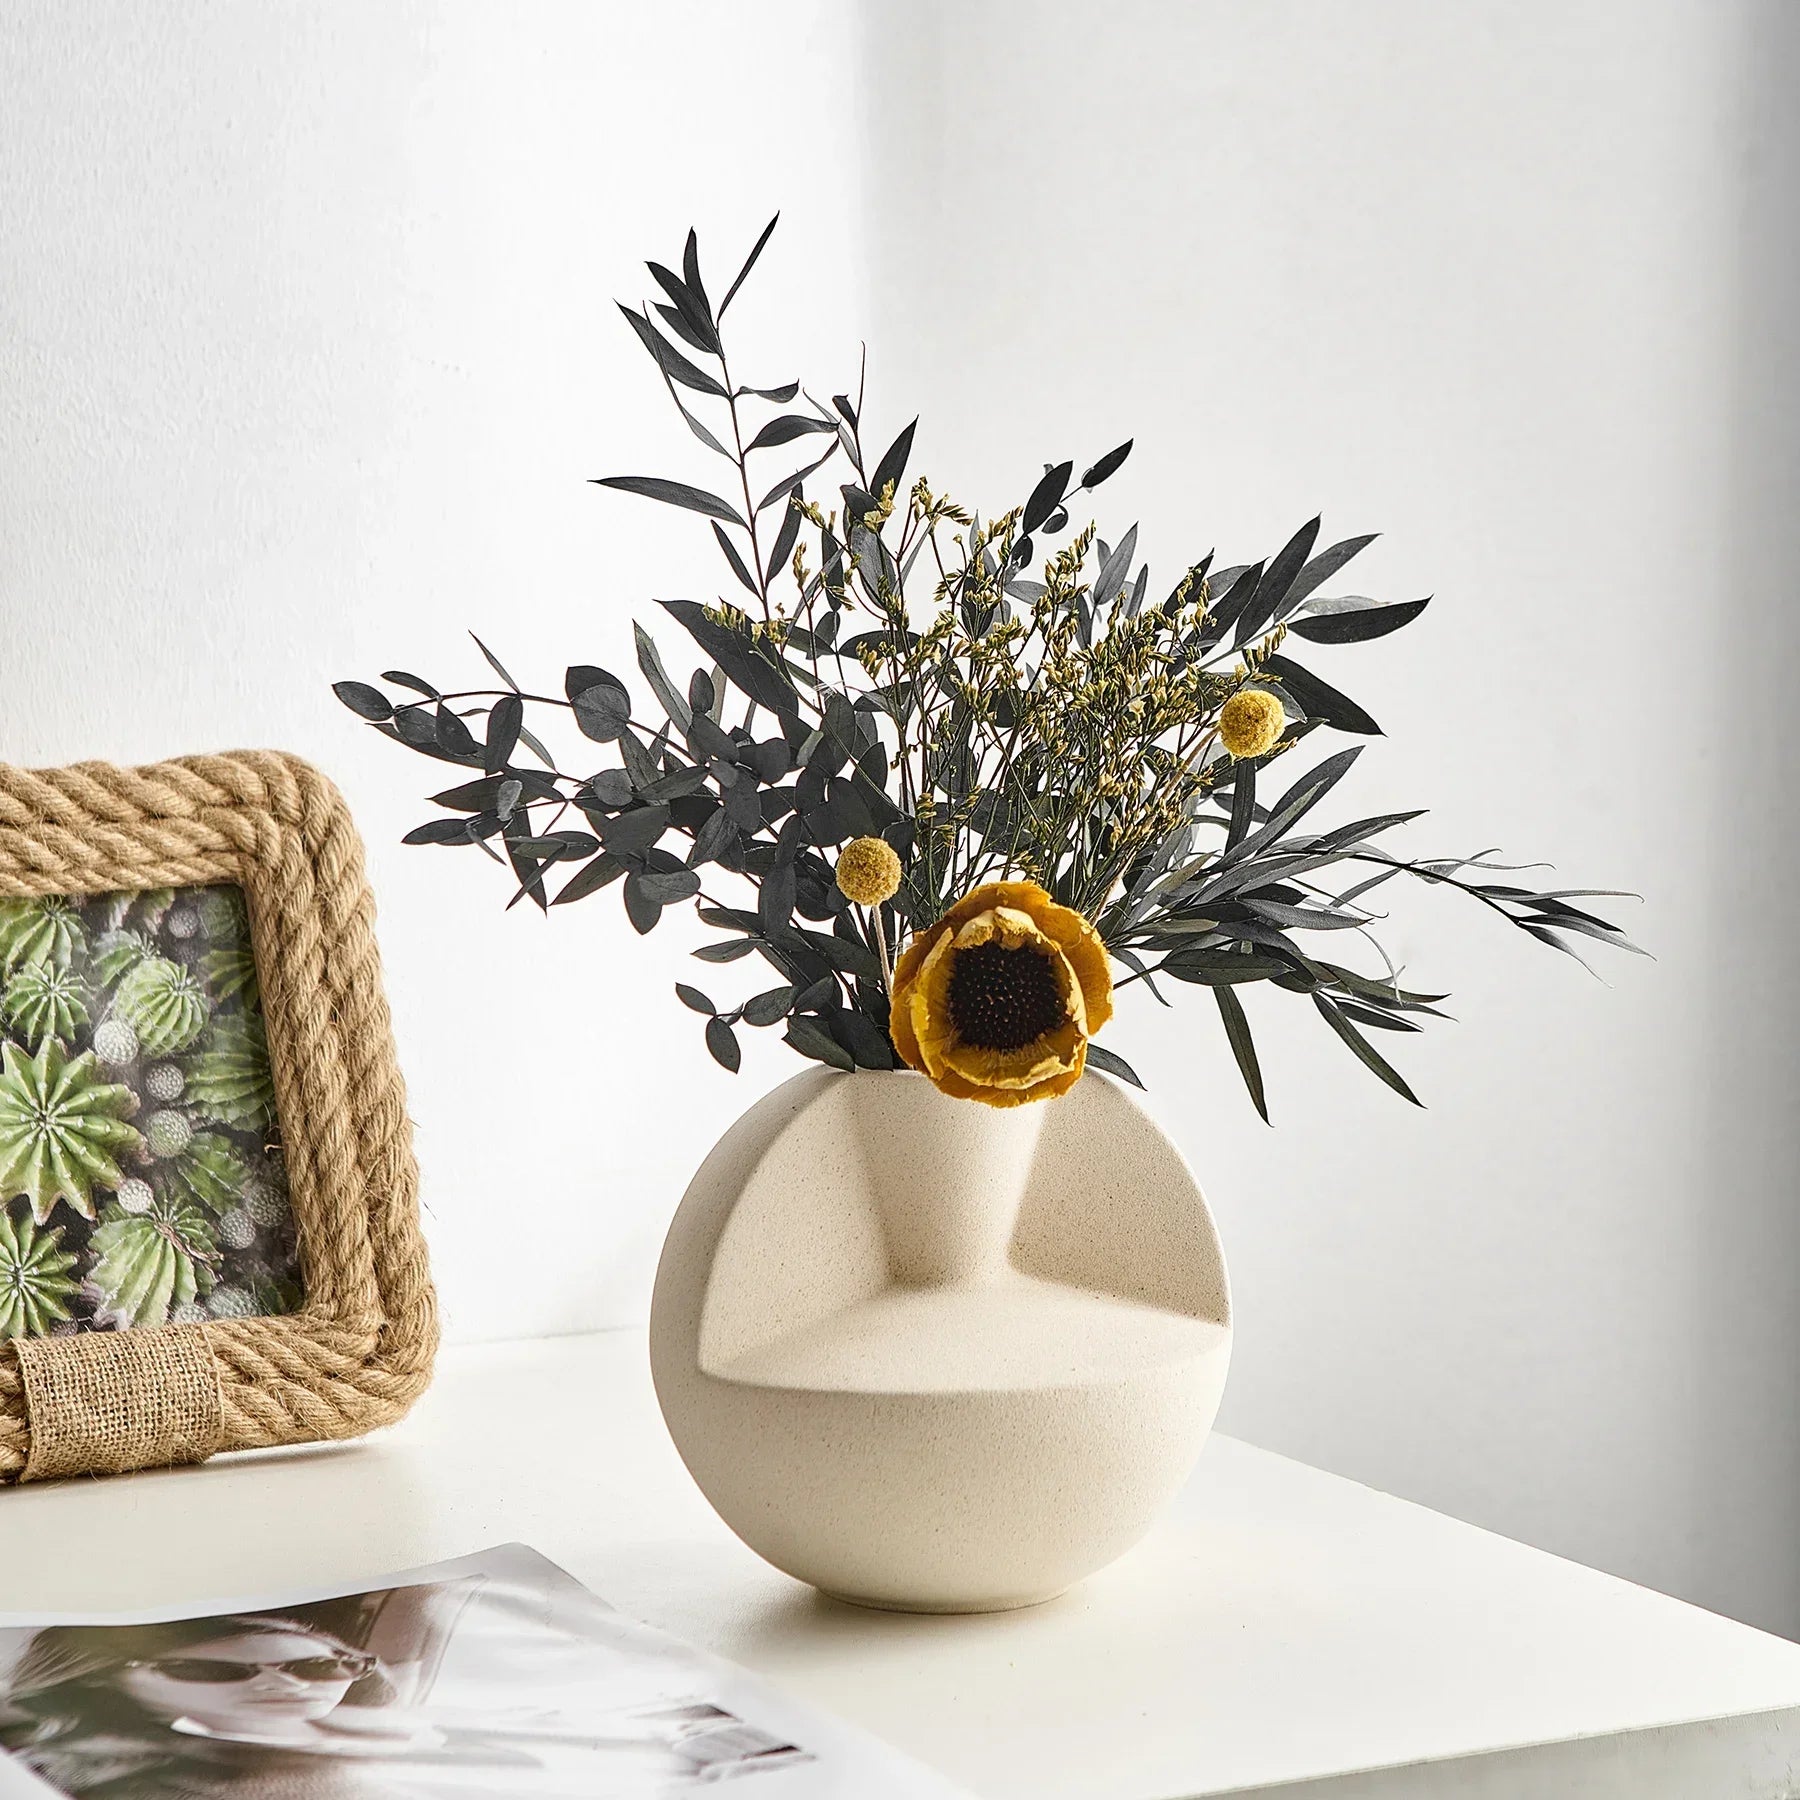 Modern Nordic Home Decor: Luxury White Ceramic Vases for Wedding, Living Room, and Office - Dried Flower Decor